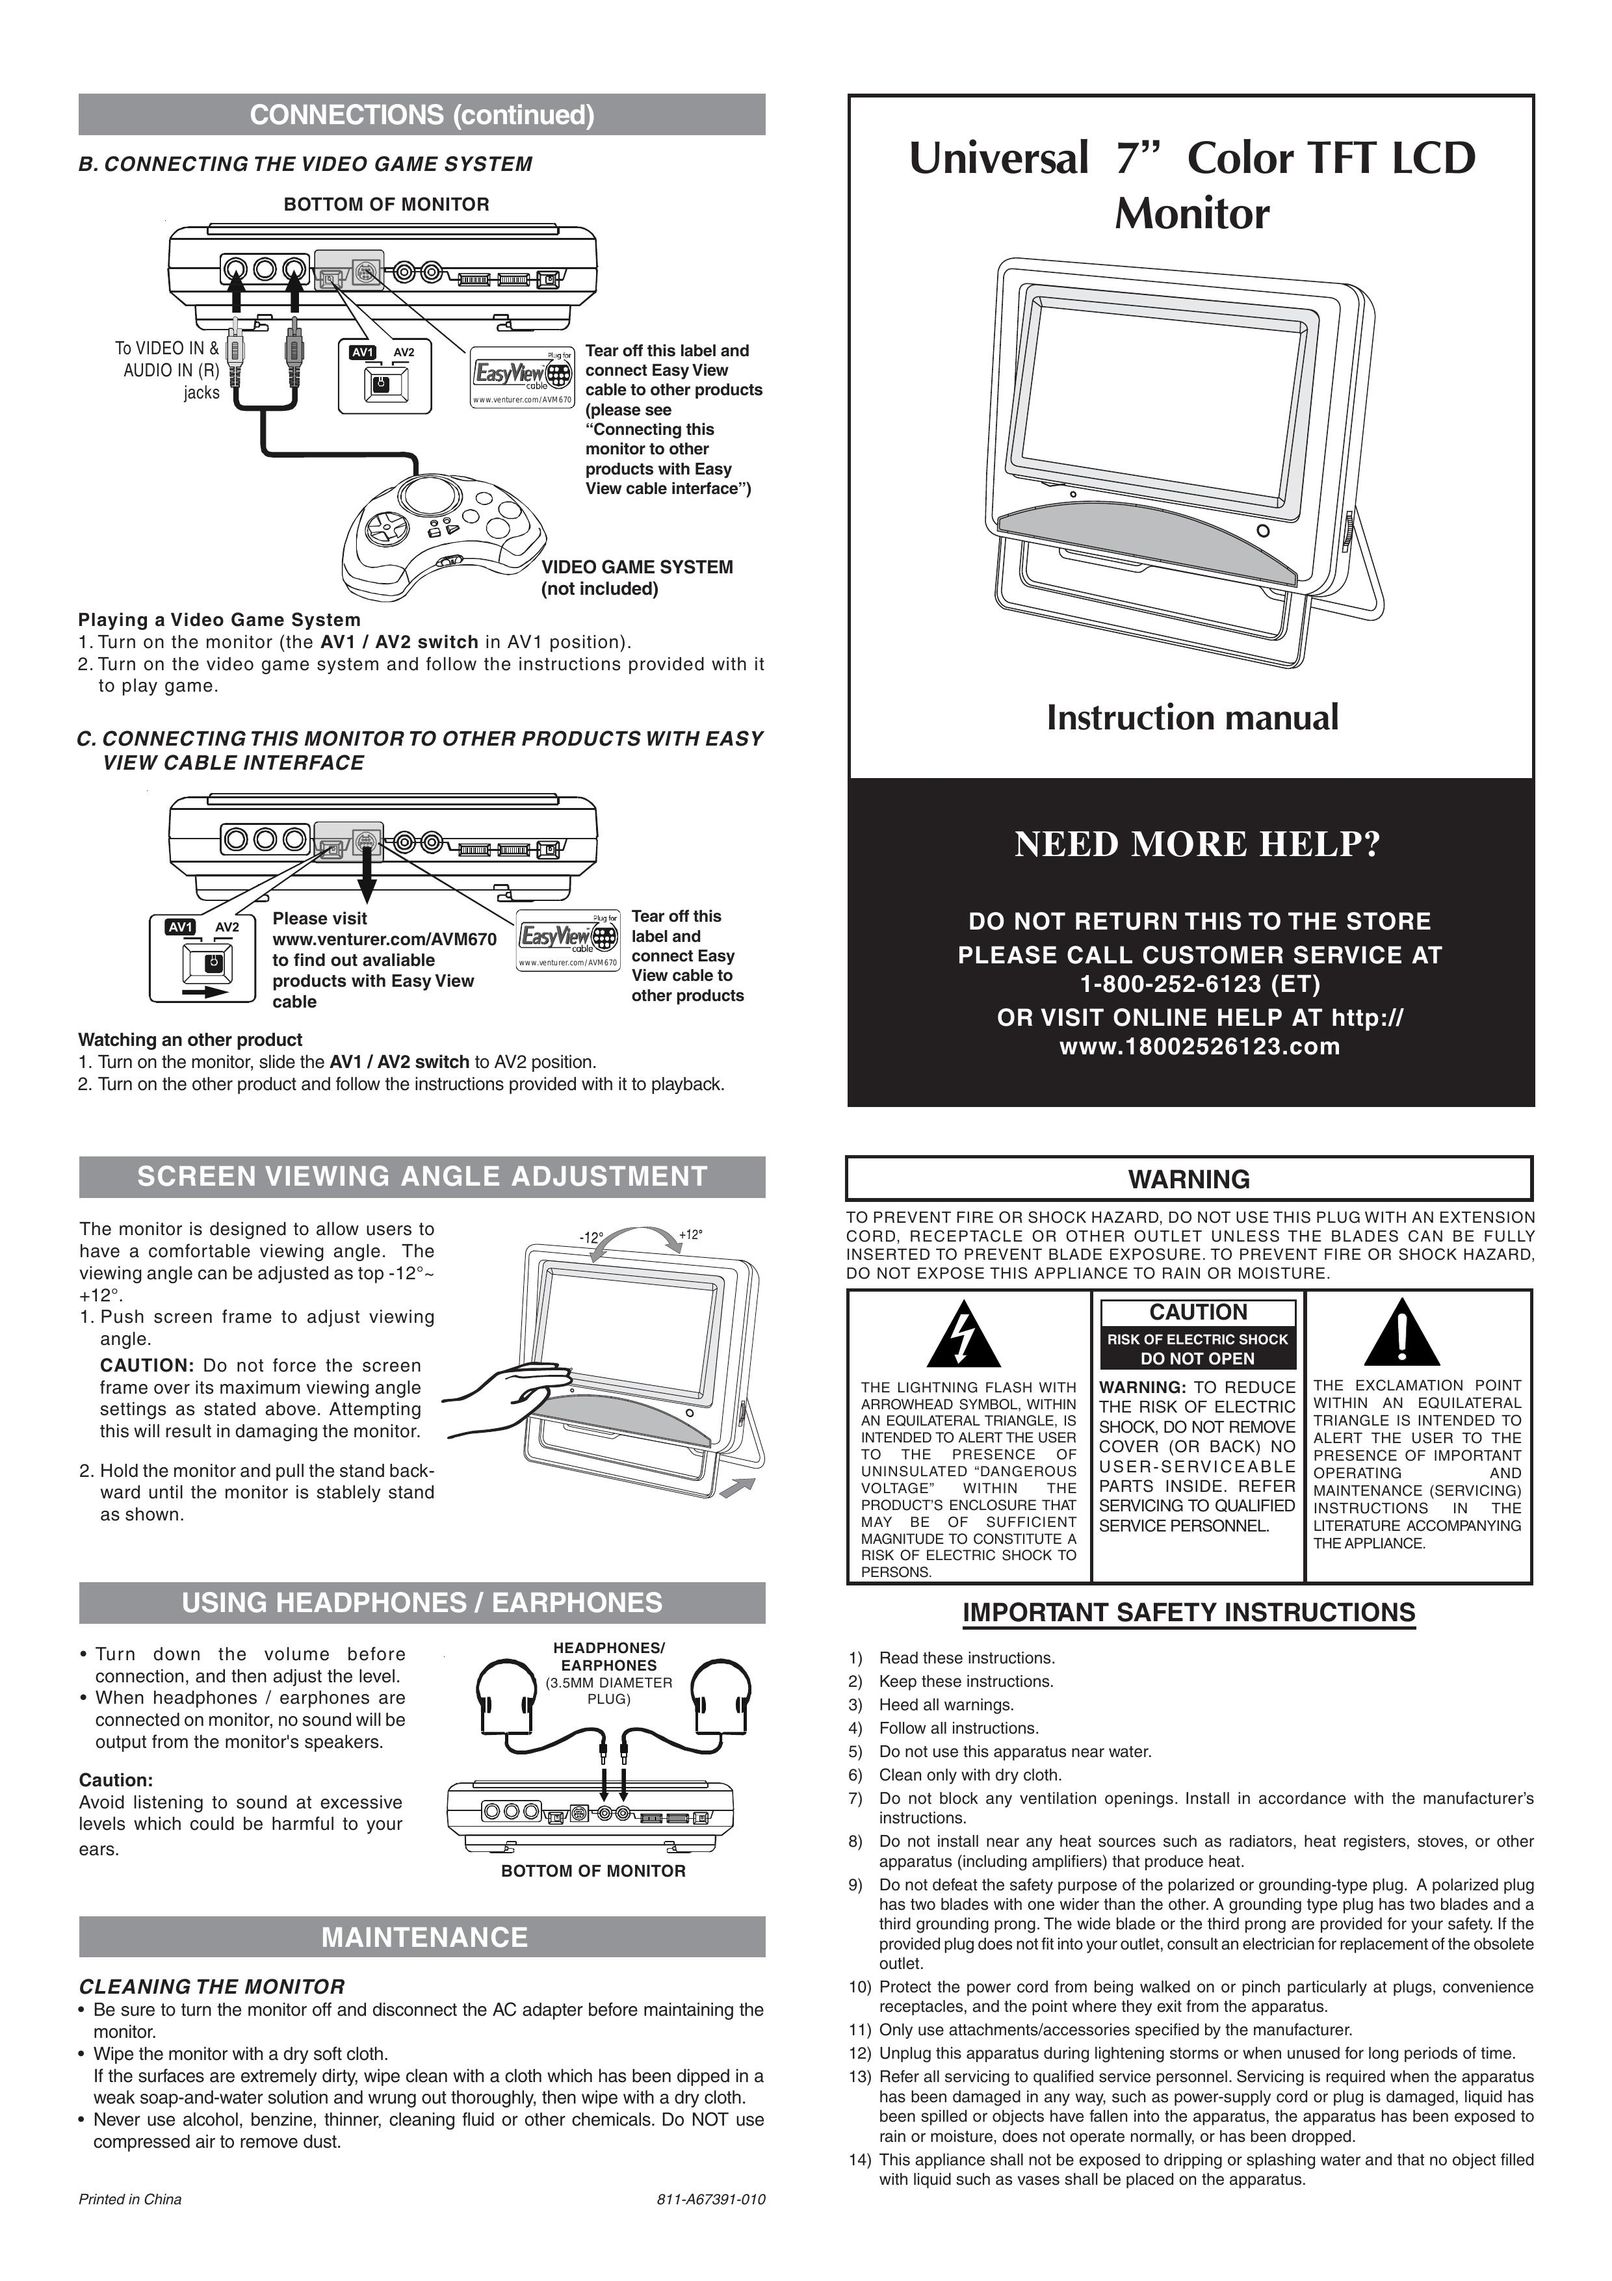 Venturer AVM670 Computer Monitor User Manual